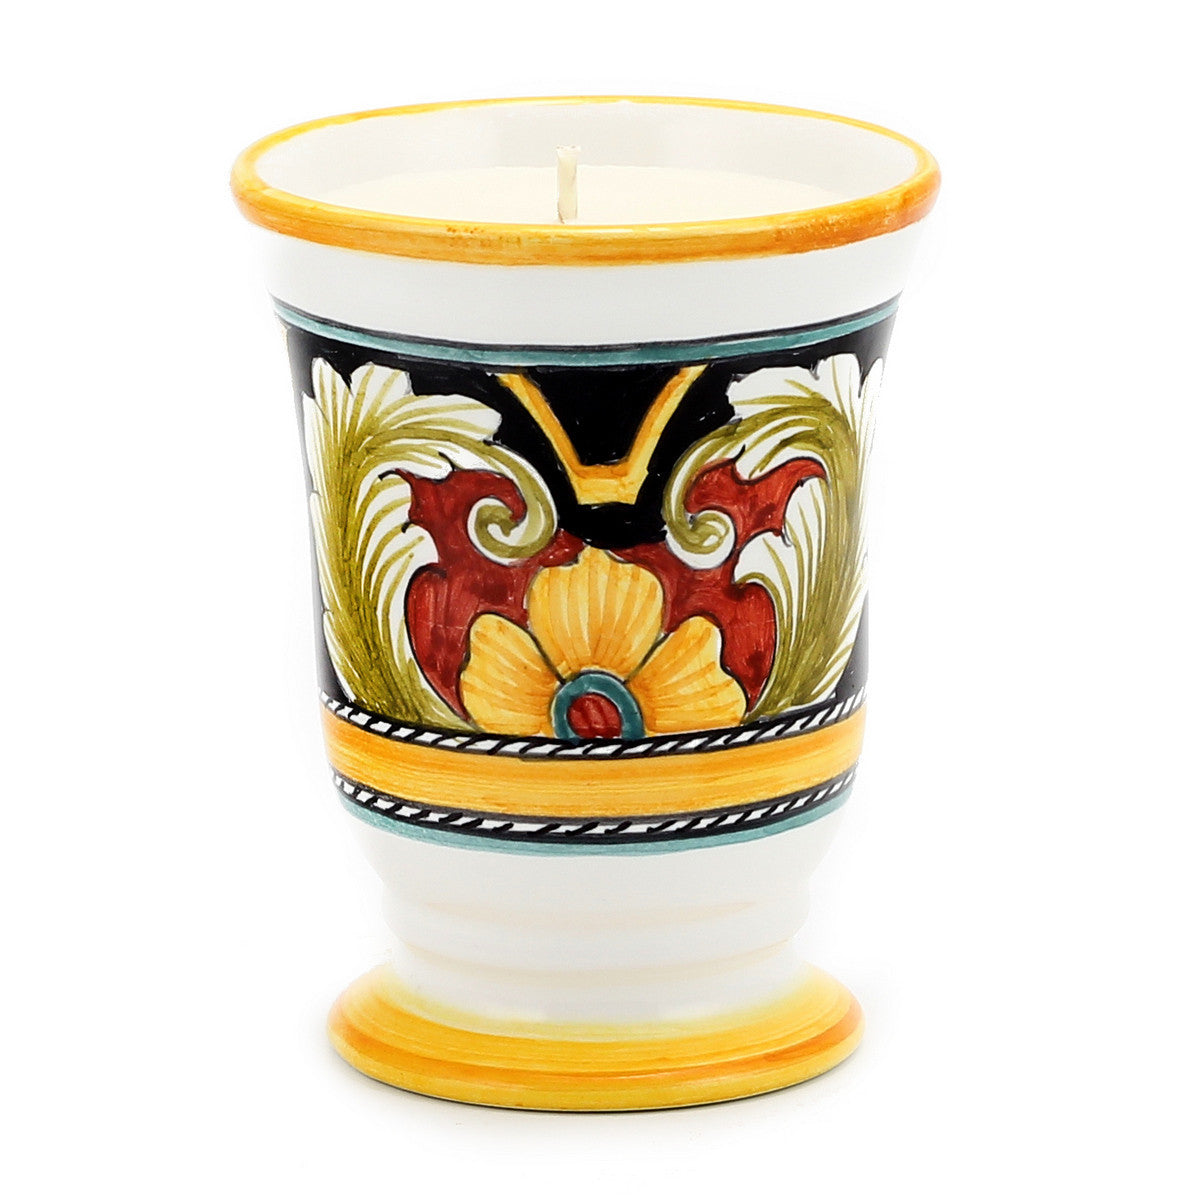 DERUTA CANDLES: Bell Cup Candle ~ Deruta Vario #4 Design - Artistica.com